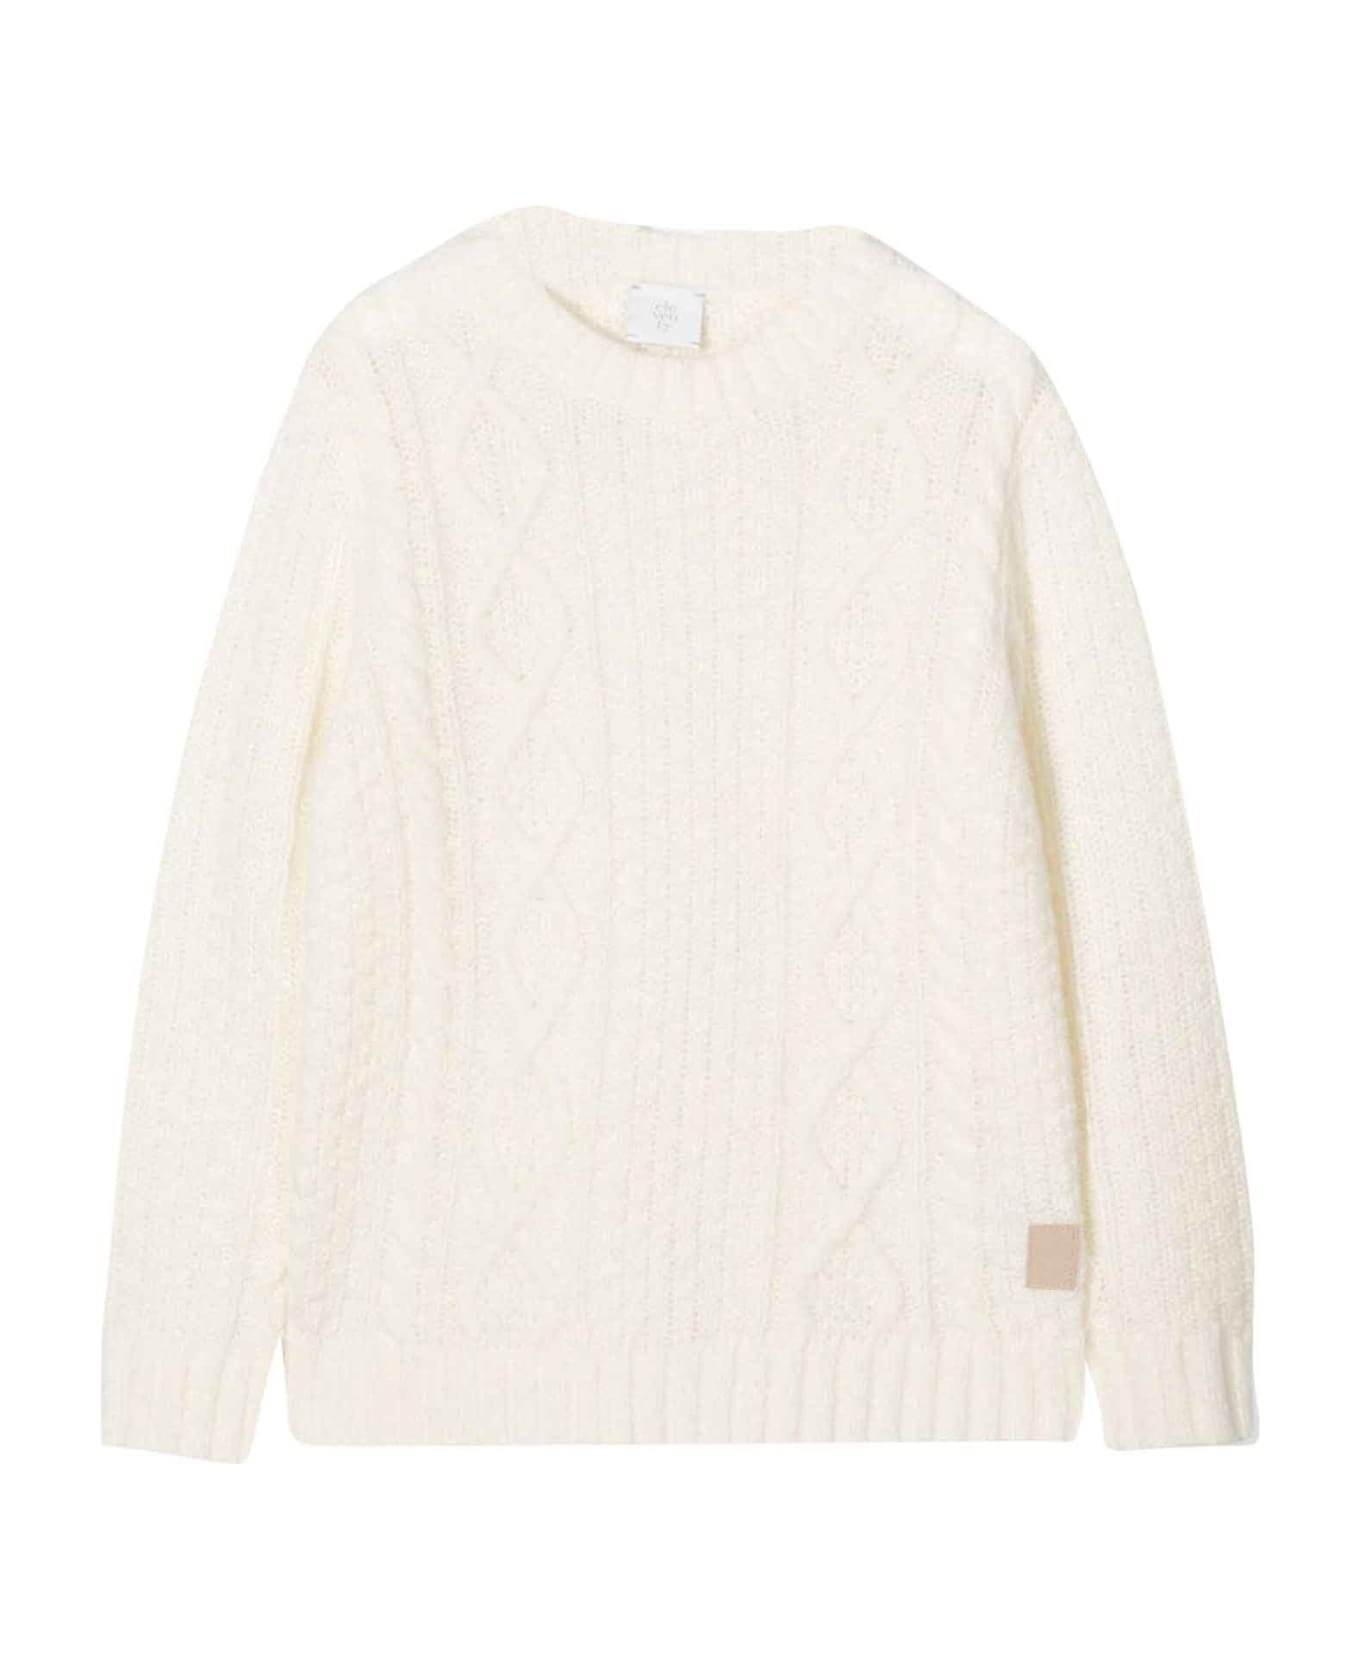 Eleventy White Sweater Teen Boy - Bianco